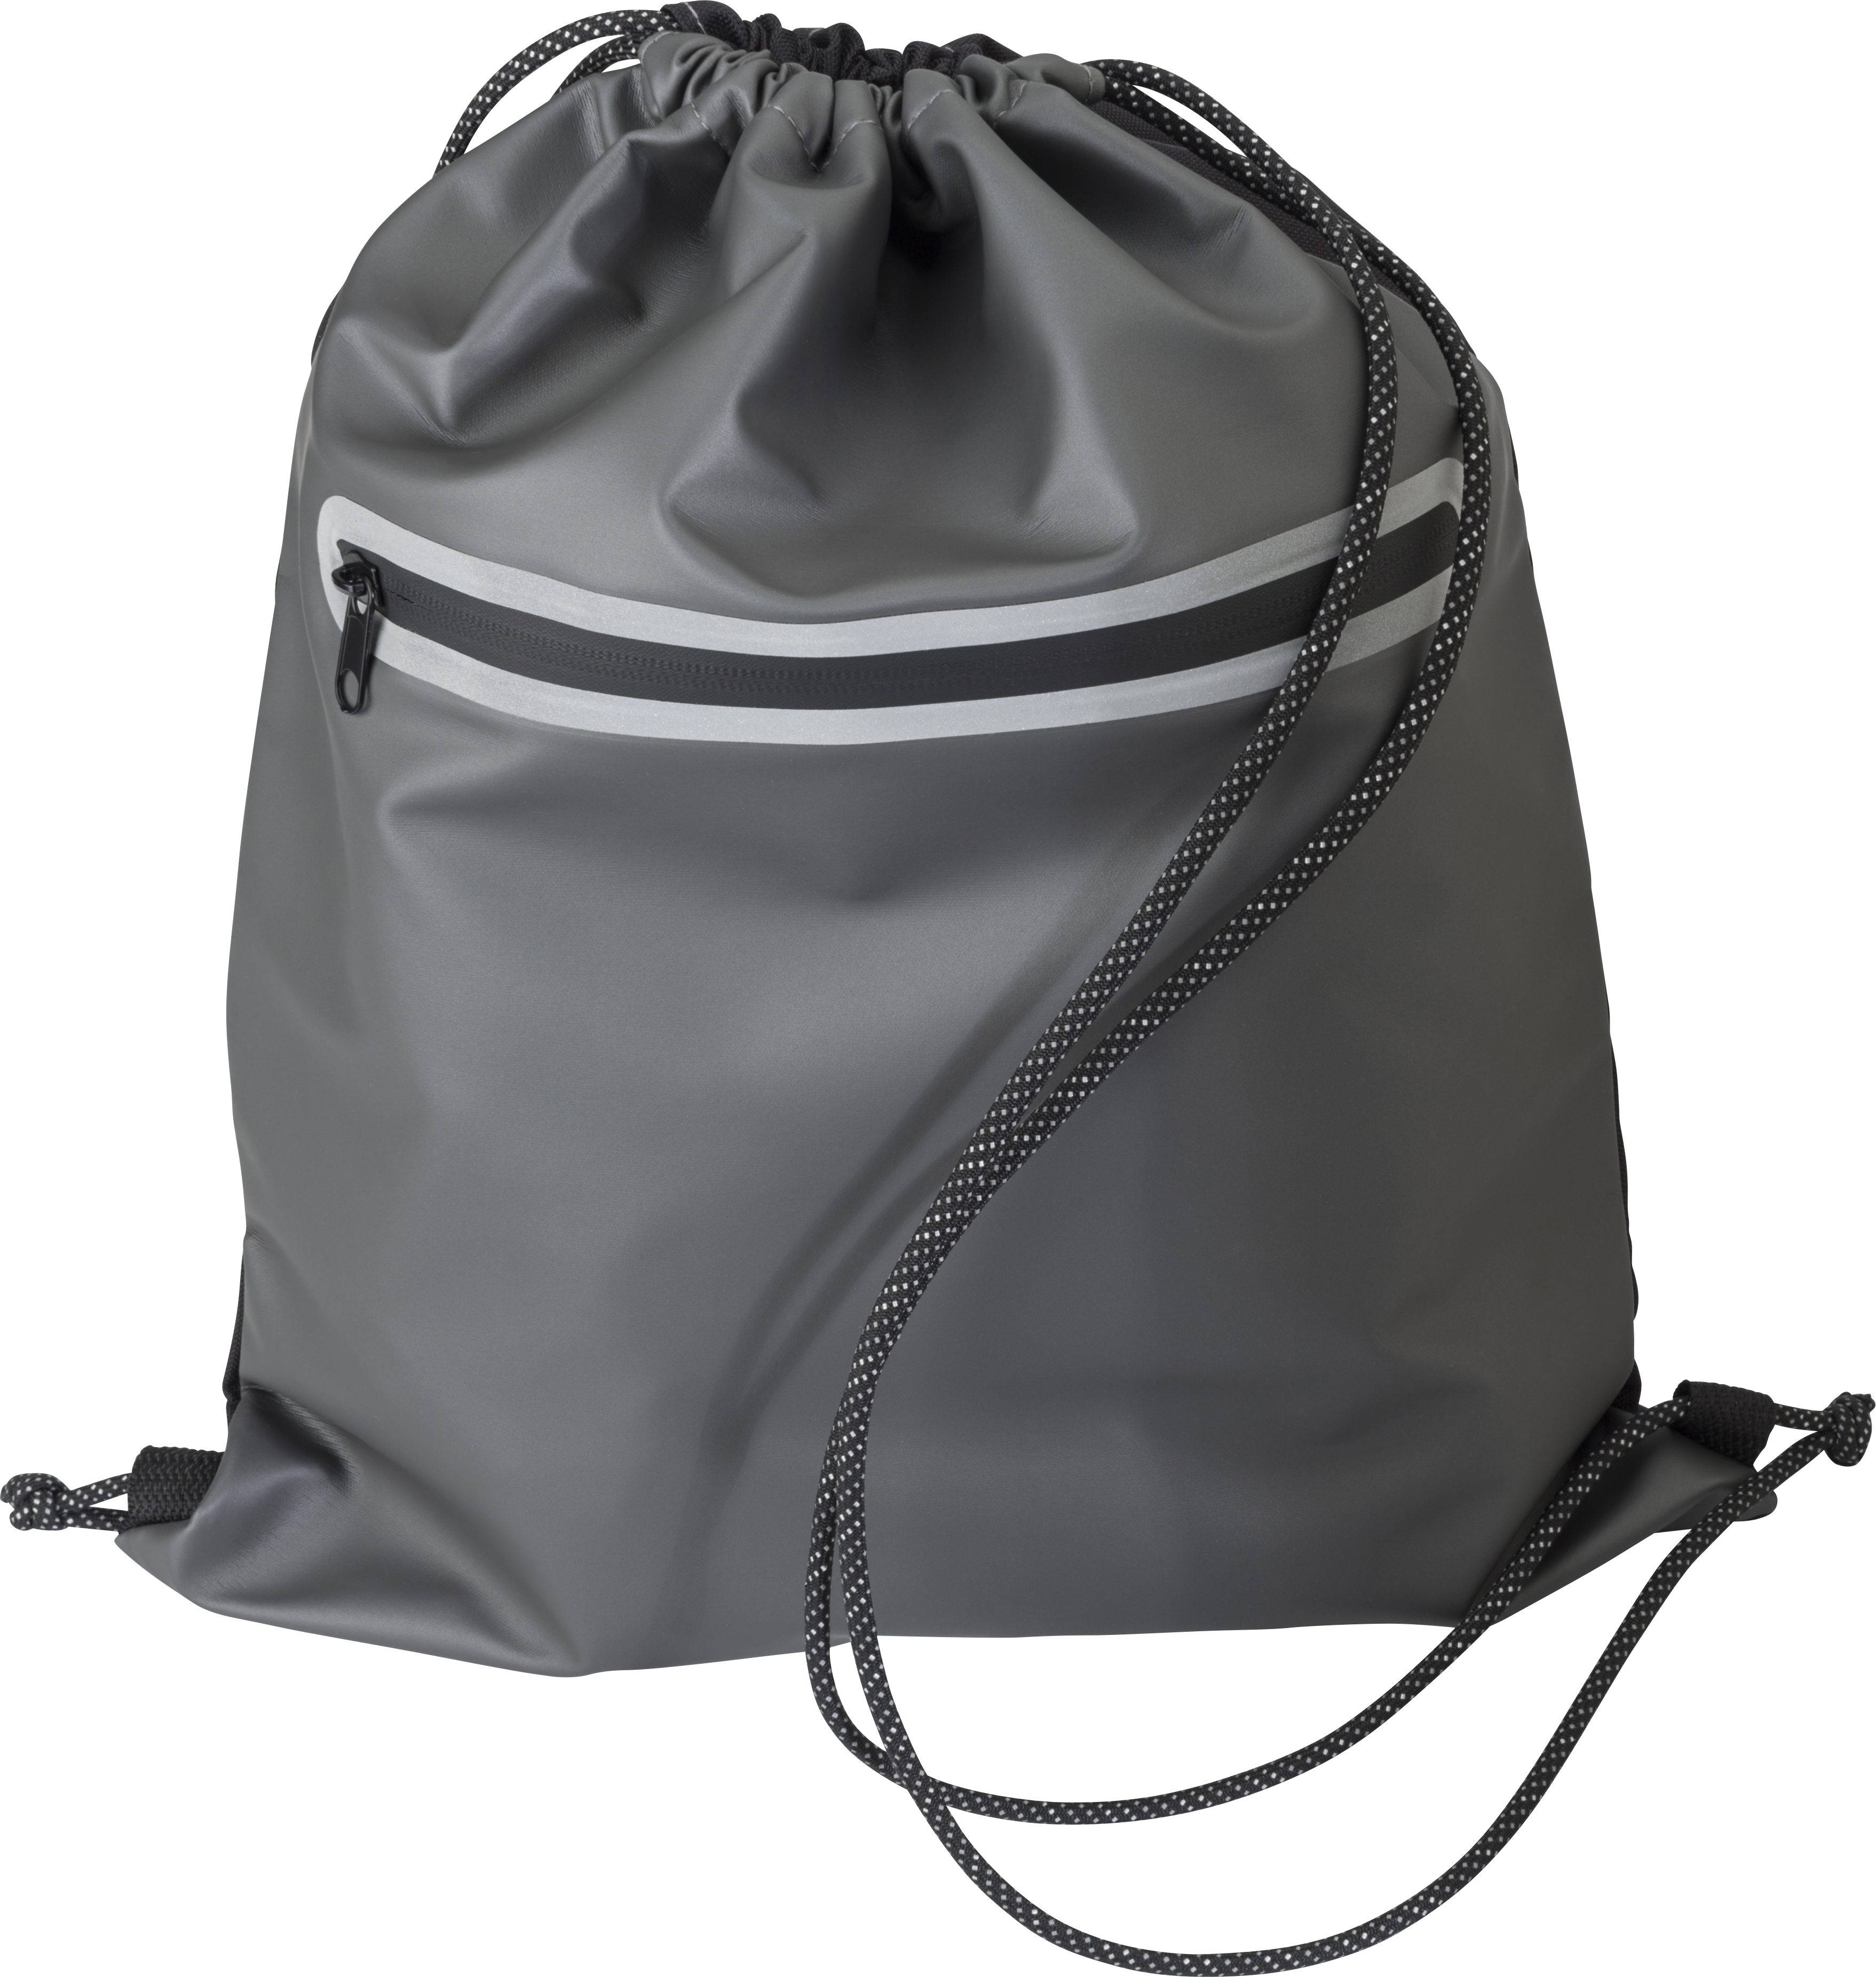 433380 003999999 3d045 frt pro01 fal - Polyester (600D) waterproof drawstring backpack